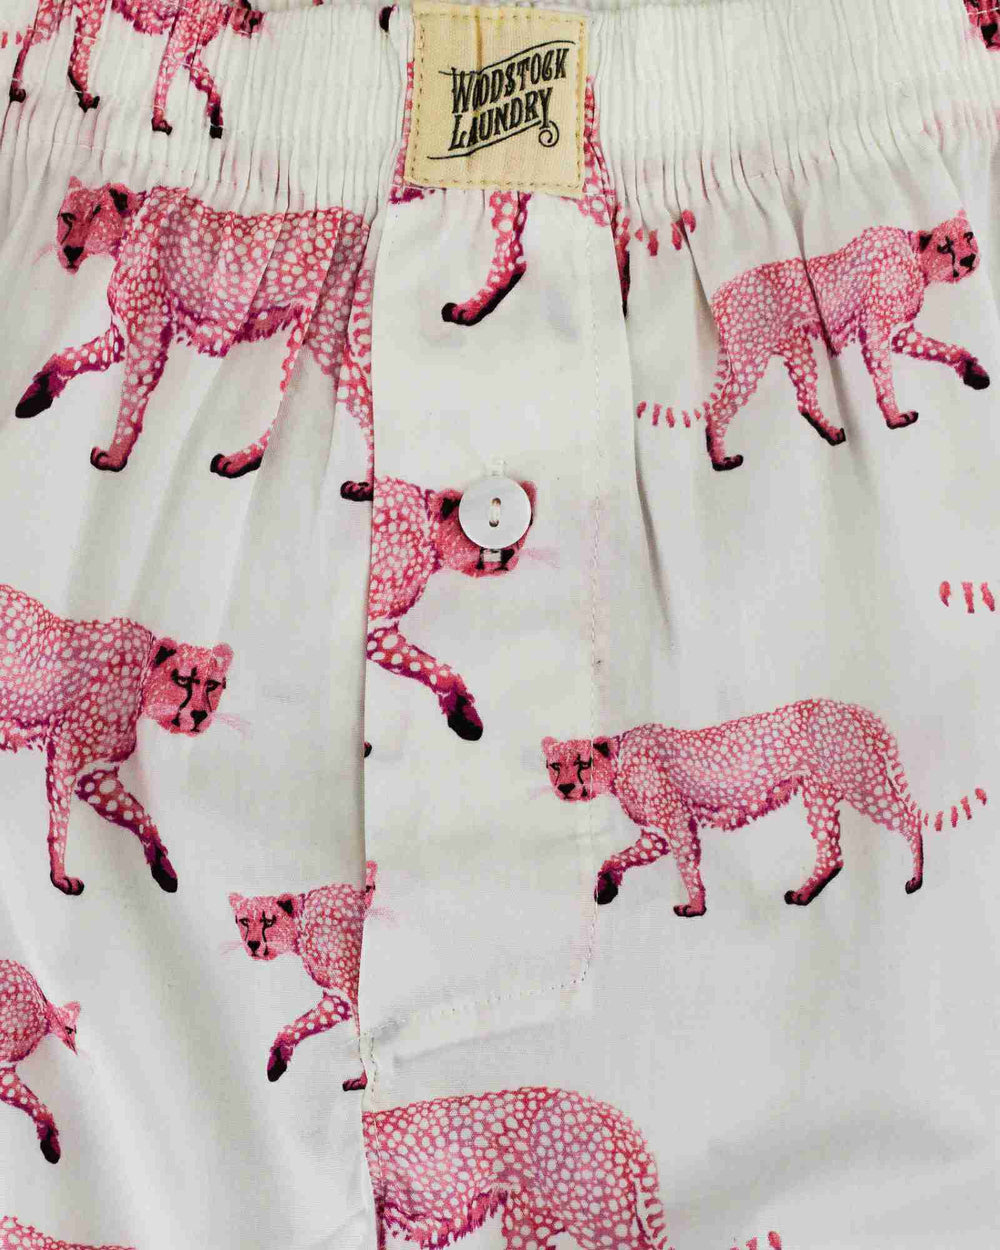 Mens white boxer shorts - pink cheetah